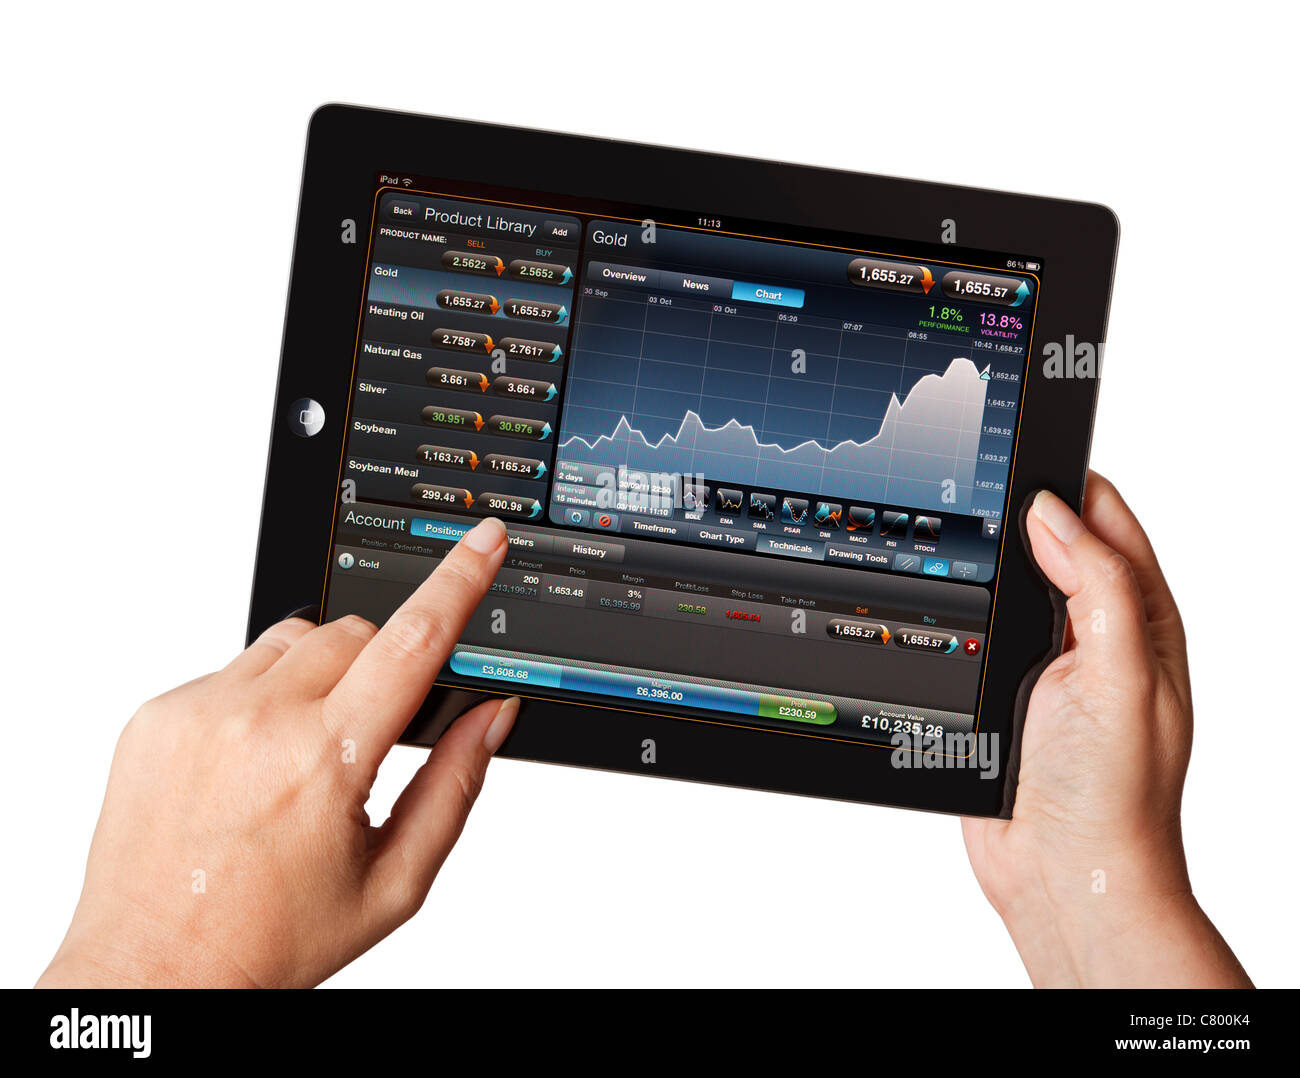 Stock Market trading - Hands holding iPad using a live stock market trading application Stock Photo